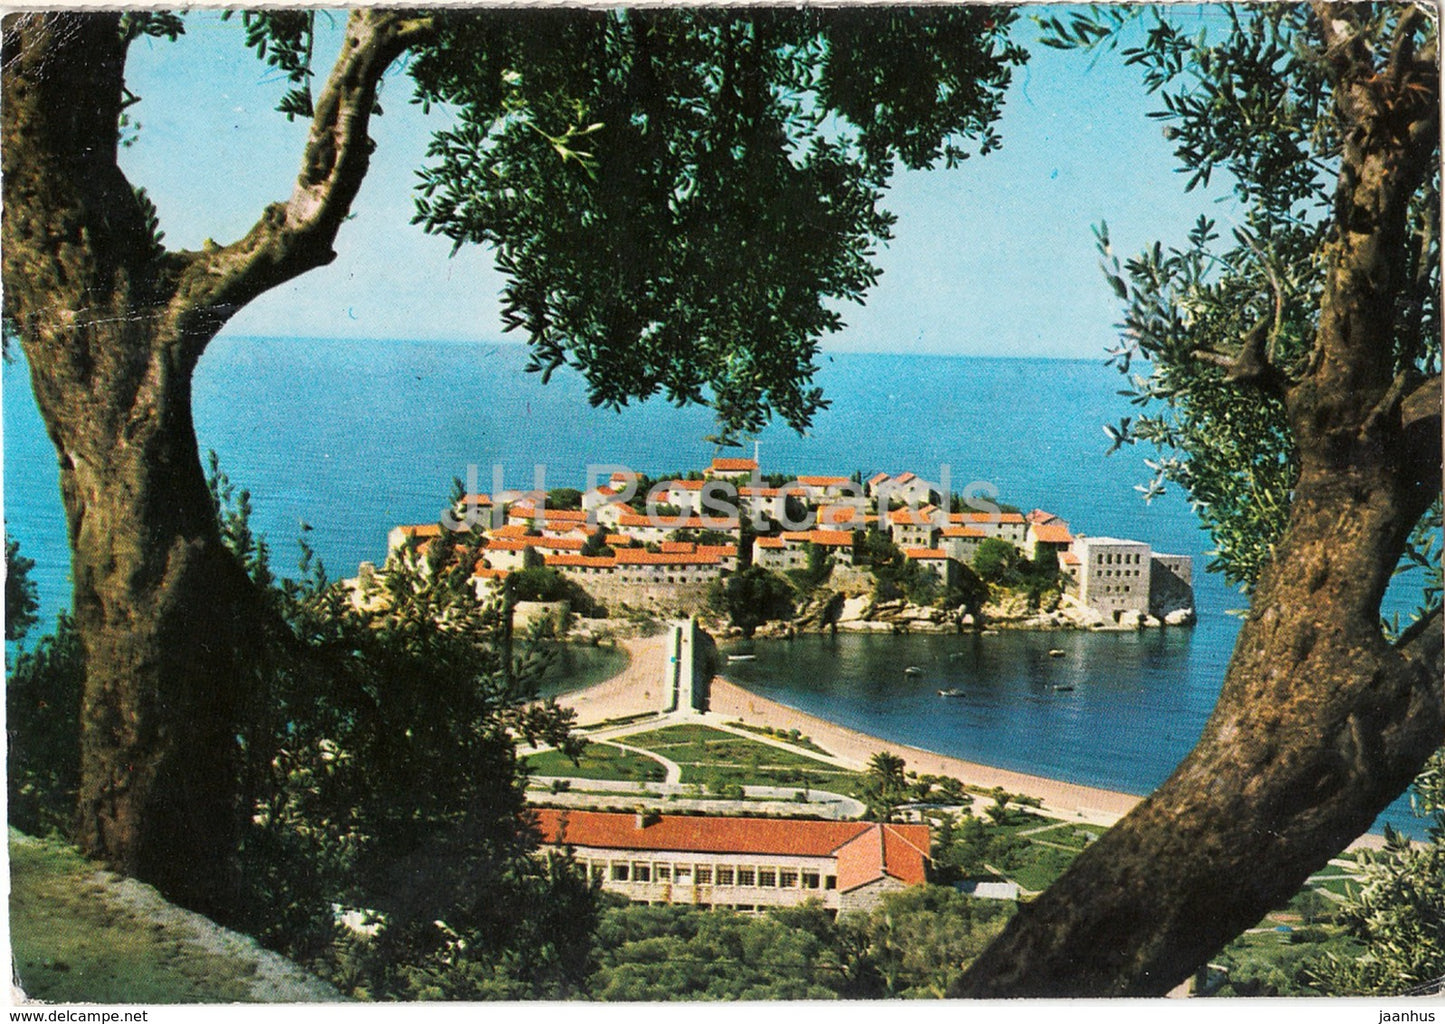 Sveti Stefan - 1982 - Montenegro - Yugoslavia - used - JH Postcards